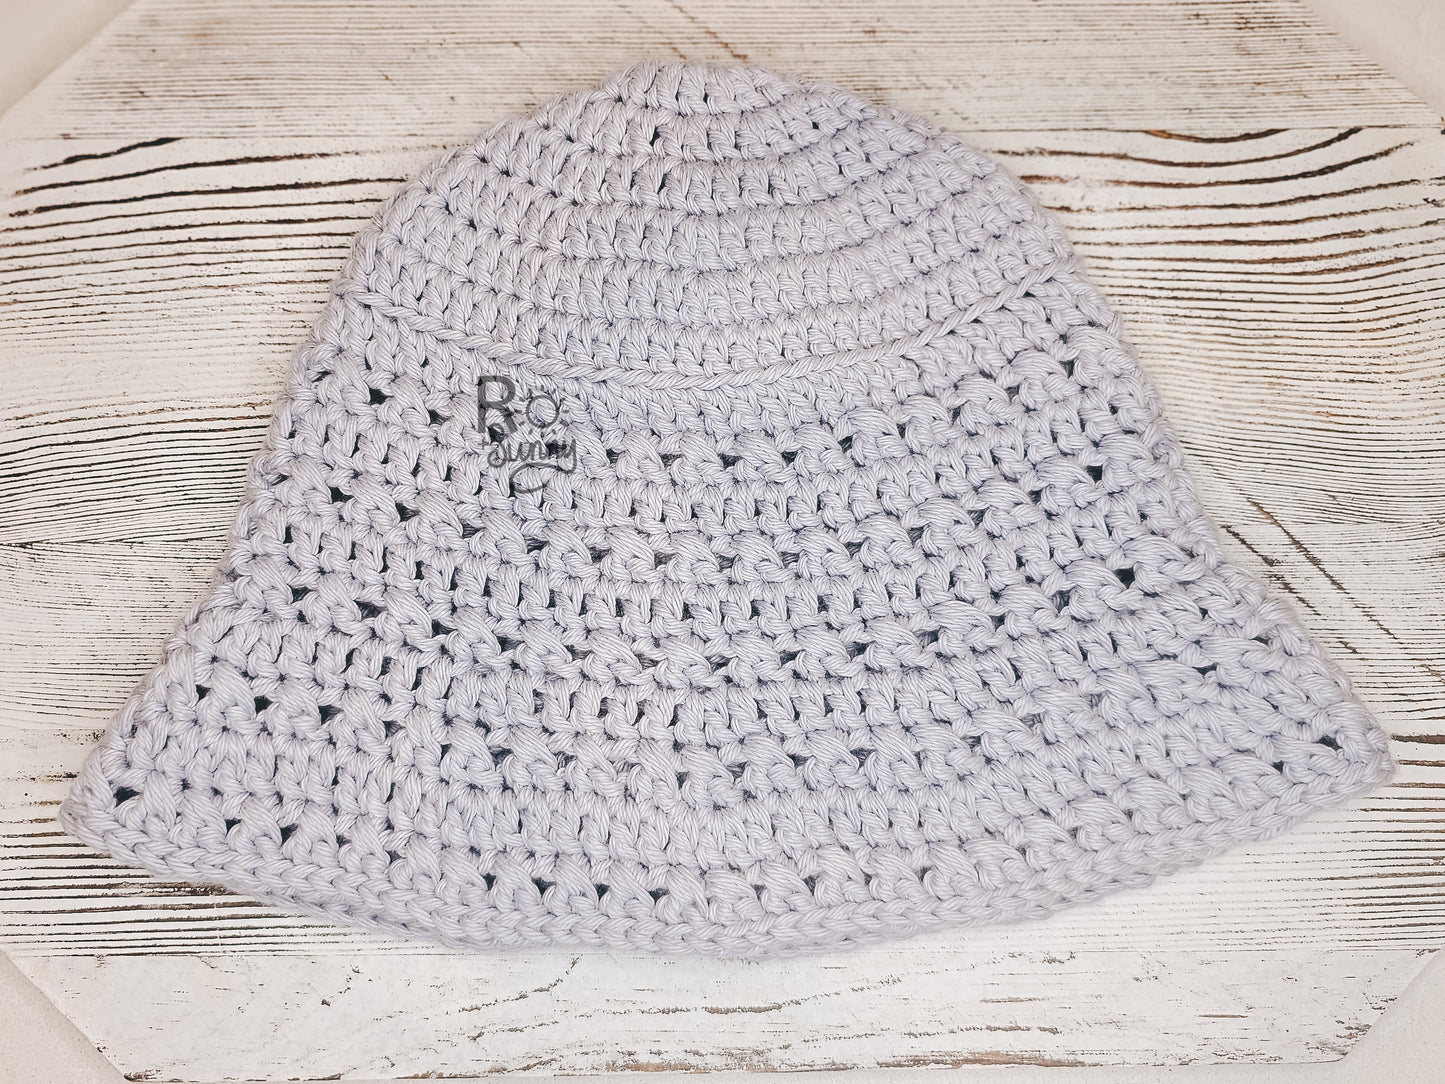 NEW! Crossed Stitch Crochet Bucket Hat - 100% Cotton